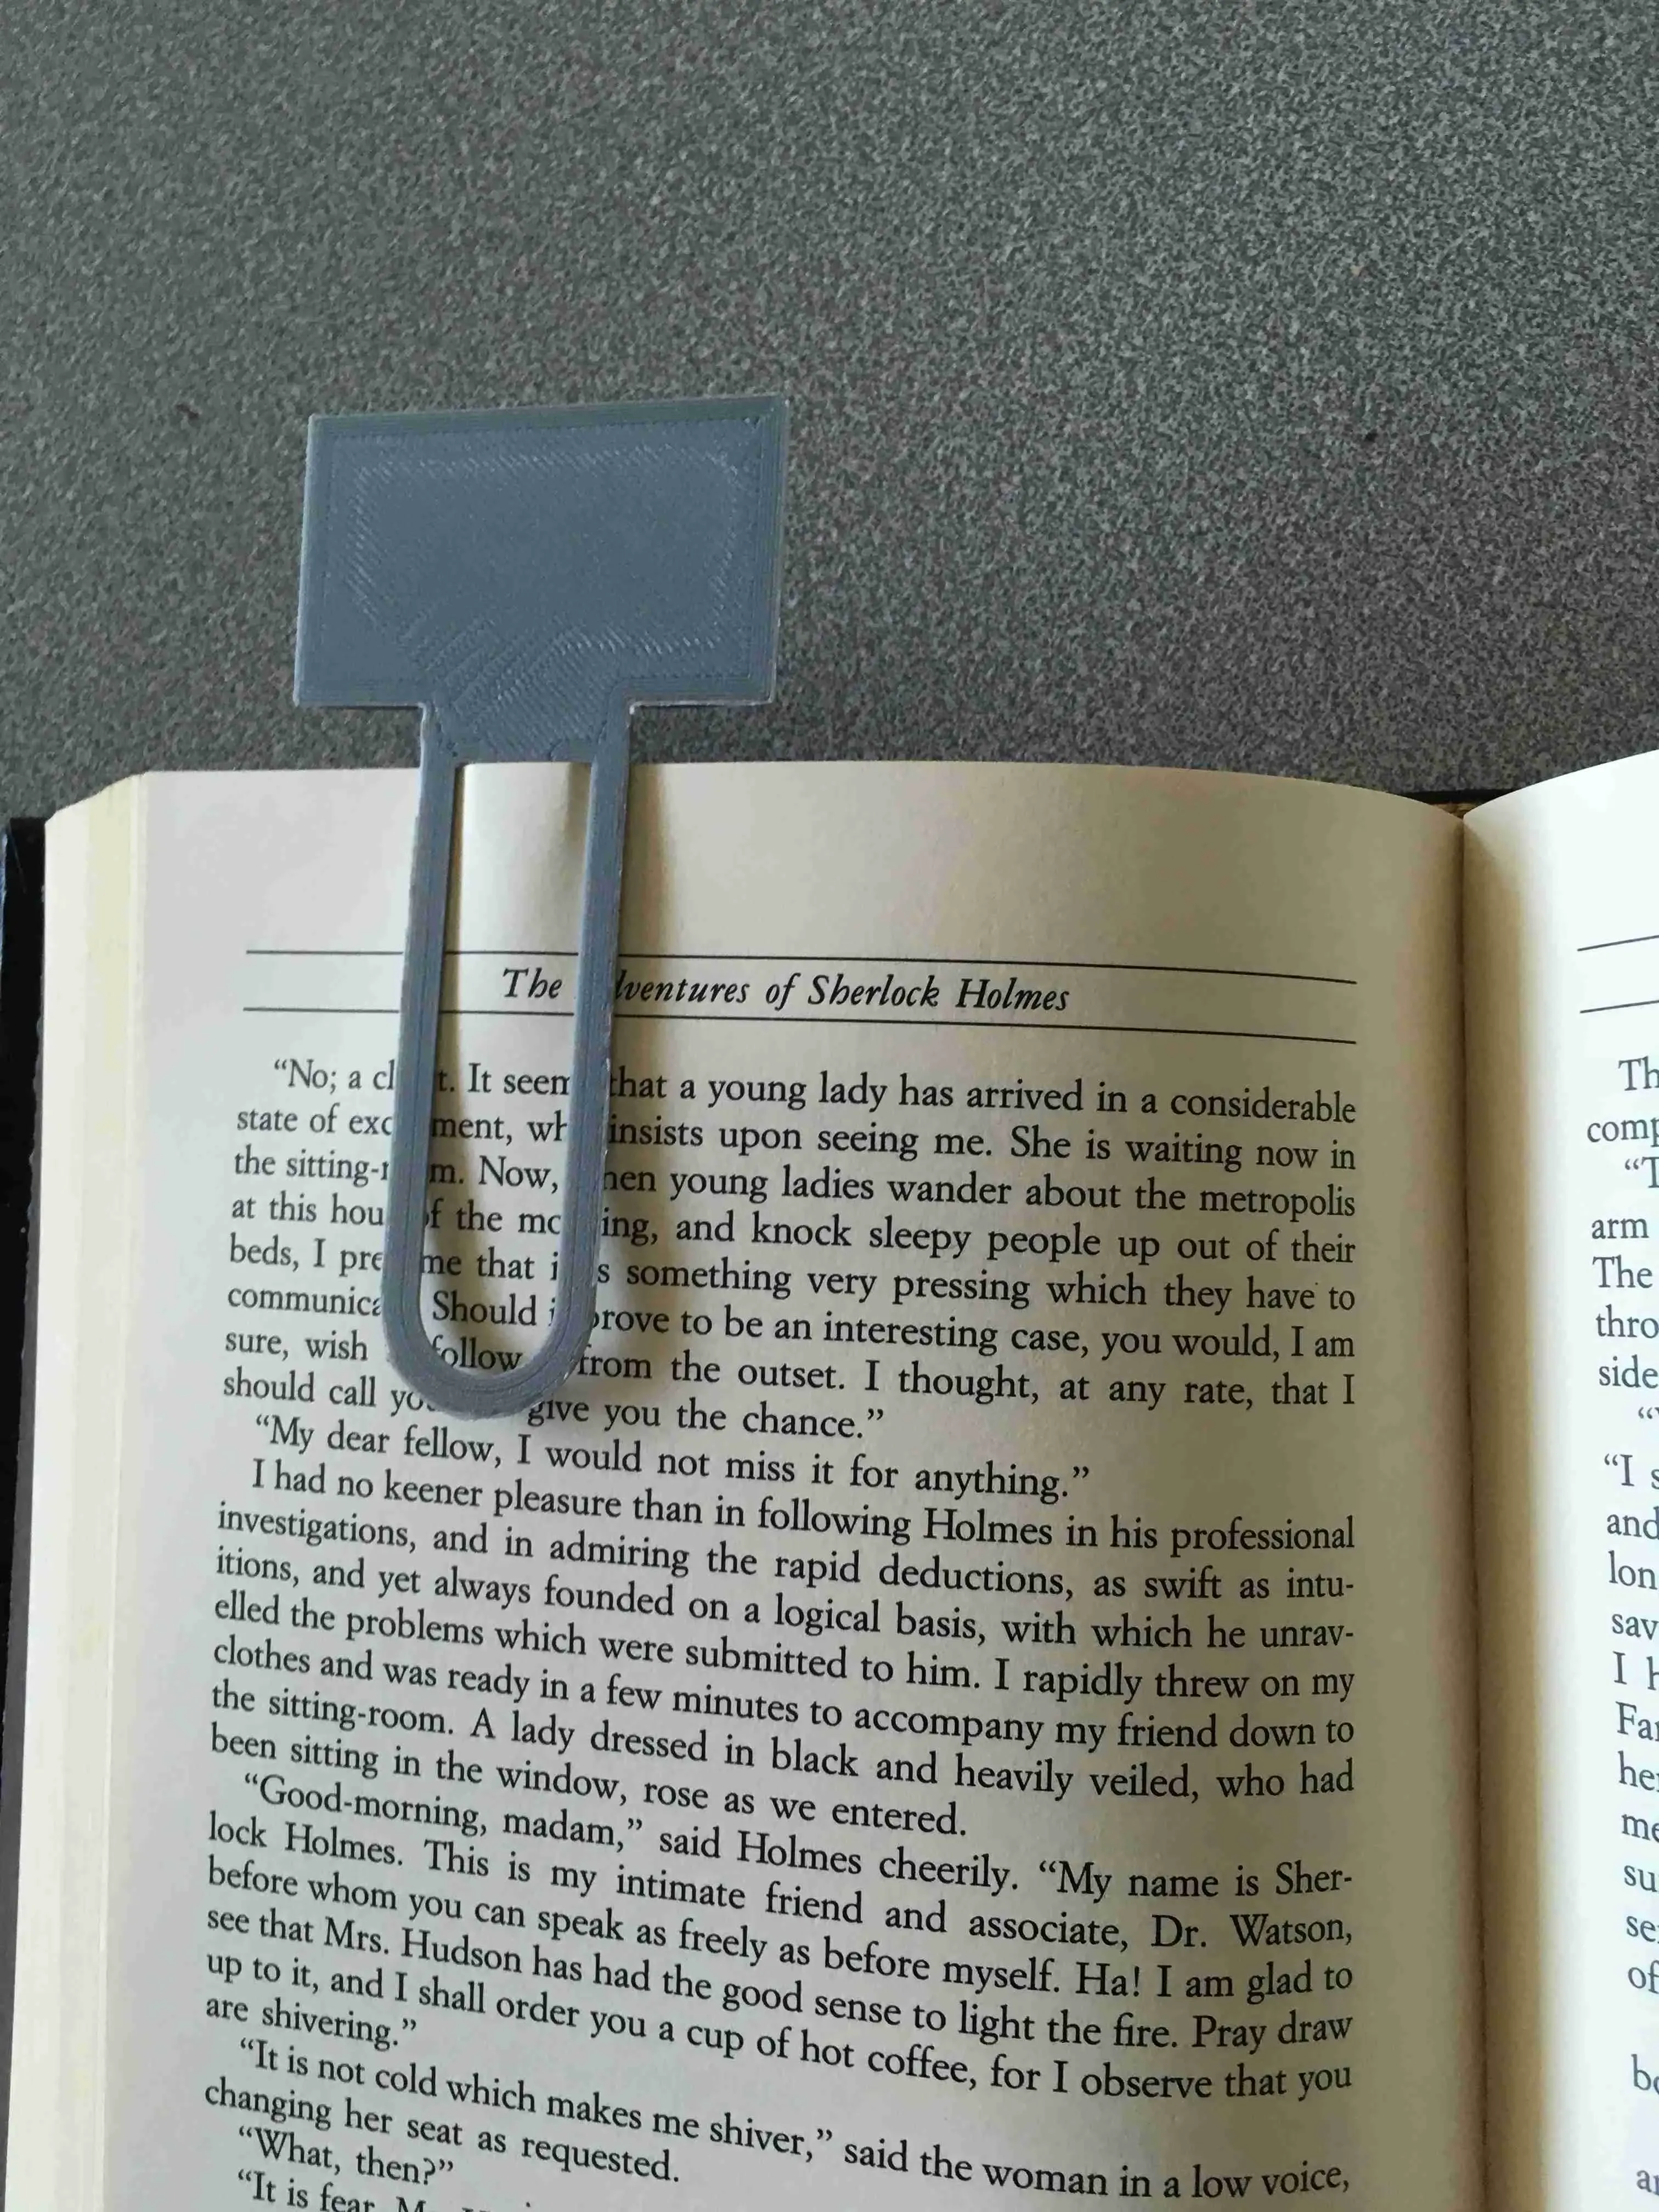 The "Keep Reading" Engraved Book Bookmark (Read Description)